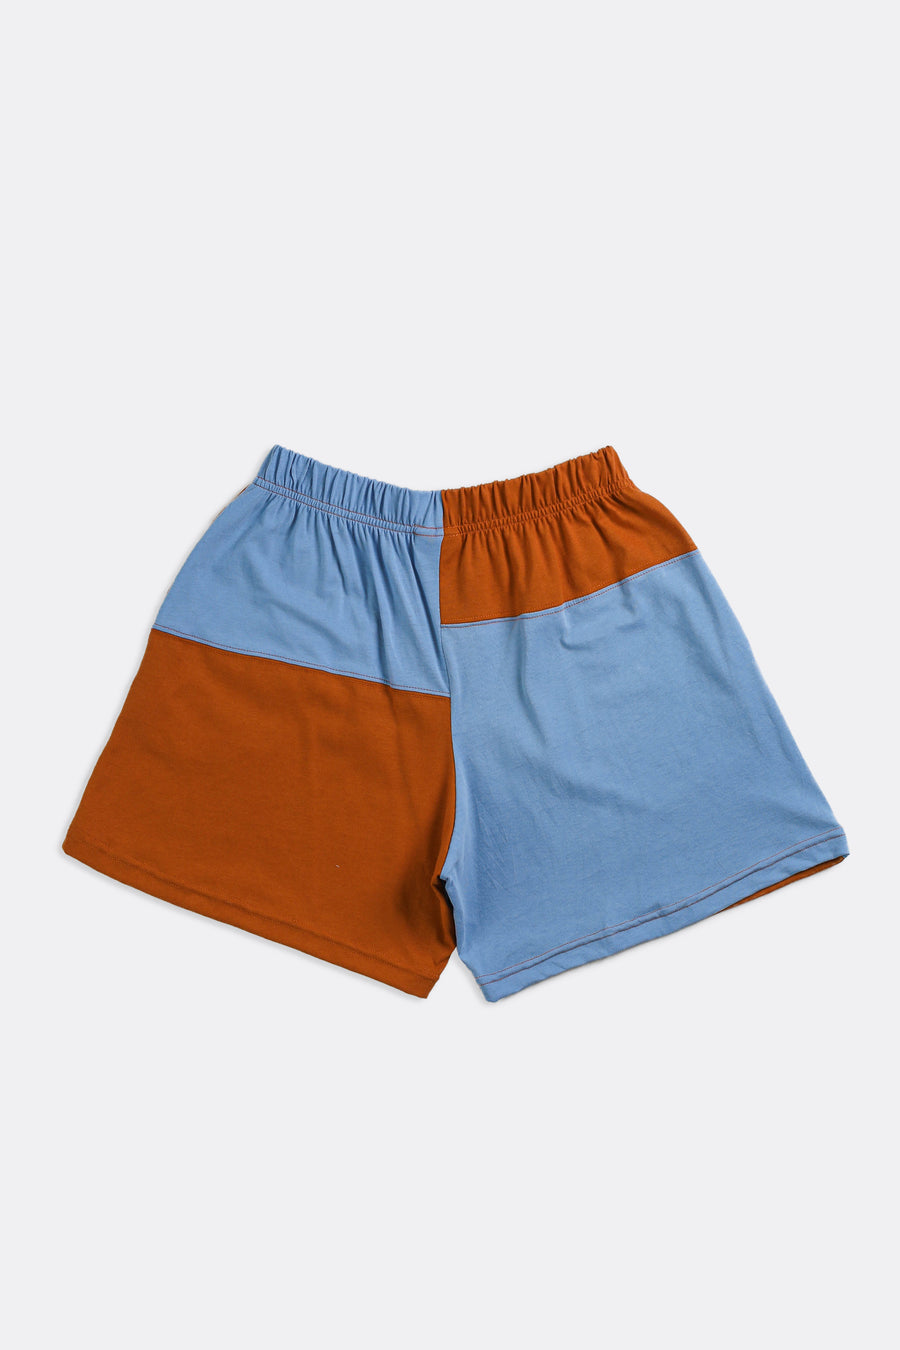 Unisex Rework Patchwork Tee Shorts - S